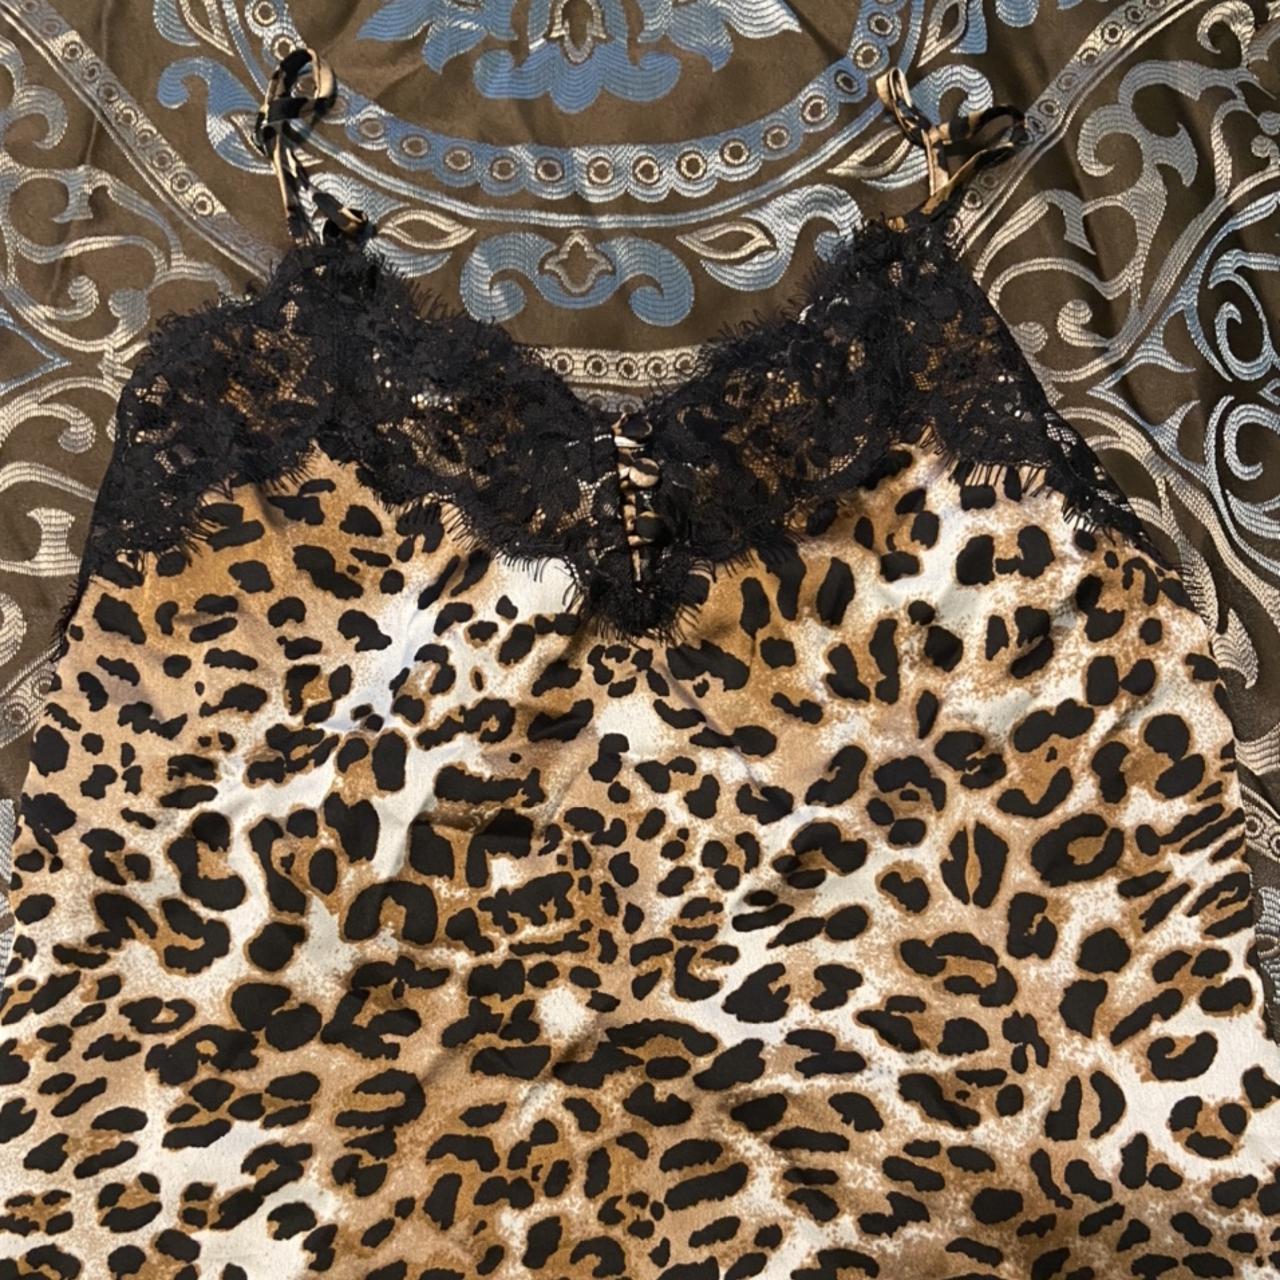 Leopard lace cami ❀ Black and white leopard - Depop